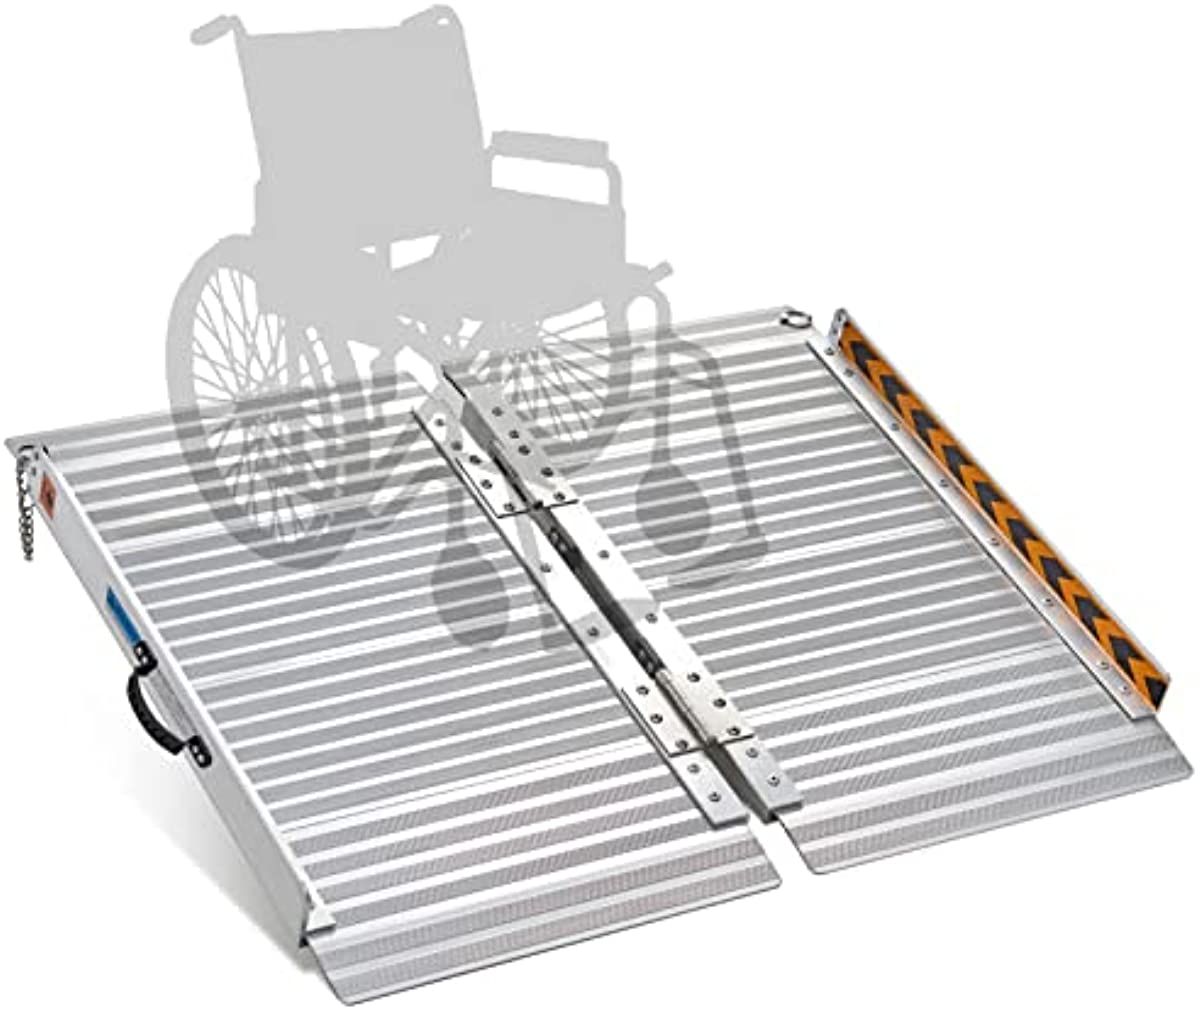 Wheelchair Ramp 2FT, gardhom 28.3\"x24\" Portable Threshold Ramp 2\' Foldable Single Step Ramps for Home Minivan Curb 800lbs Load Capacity